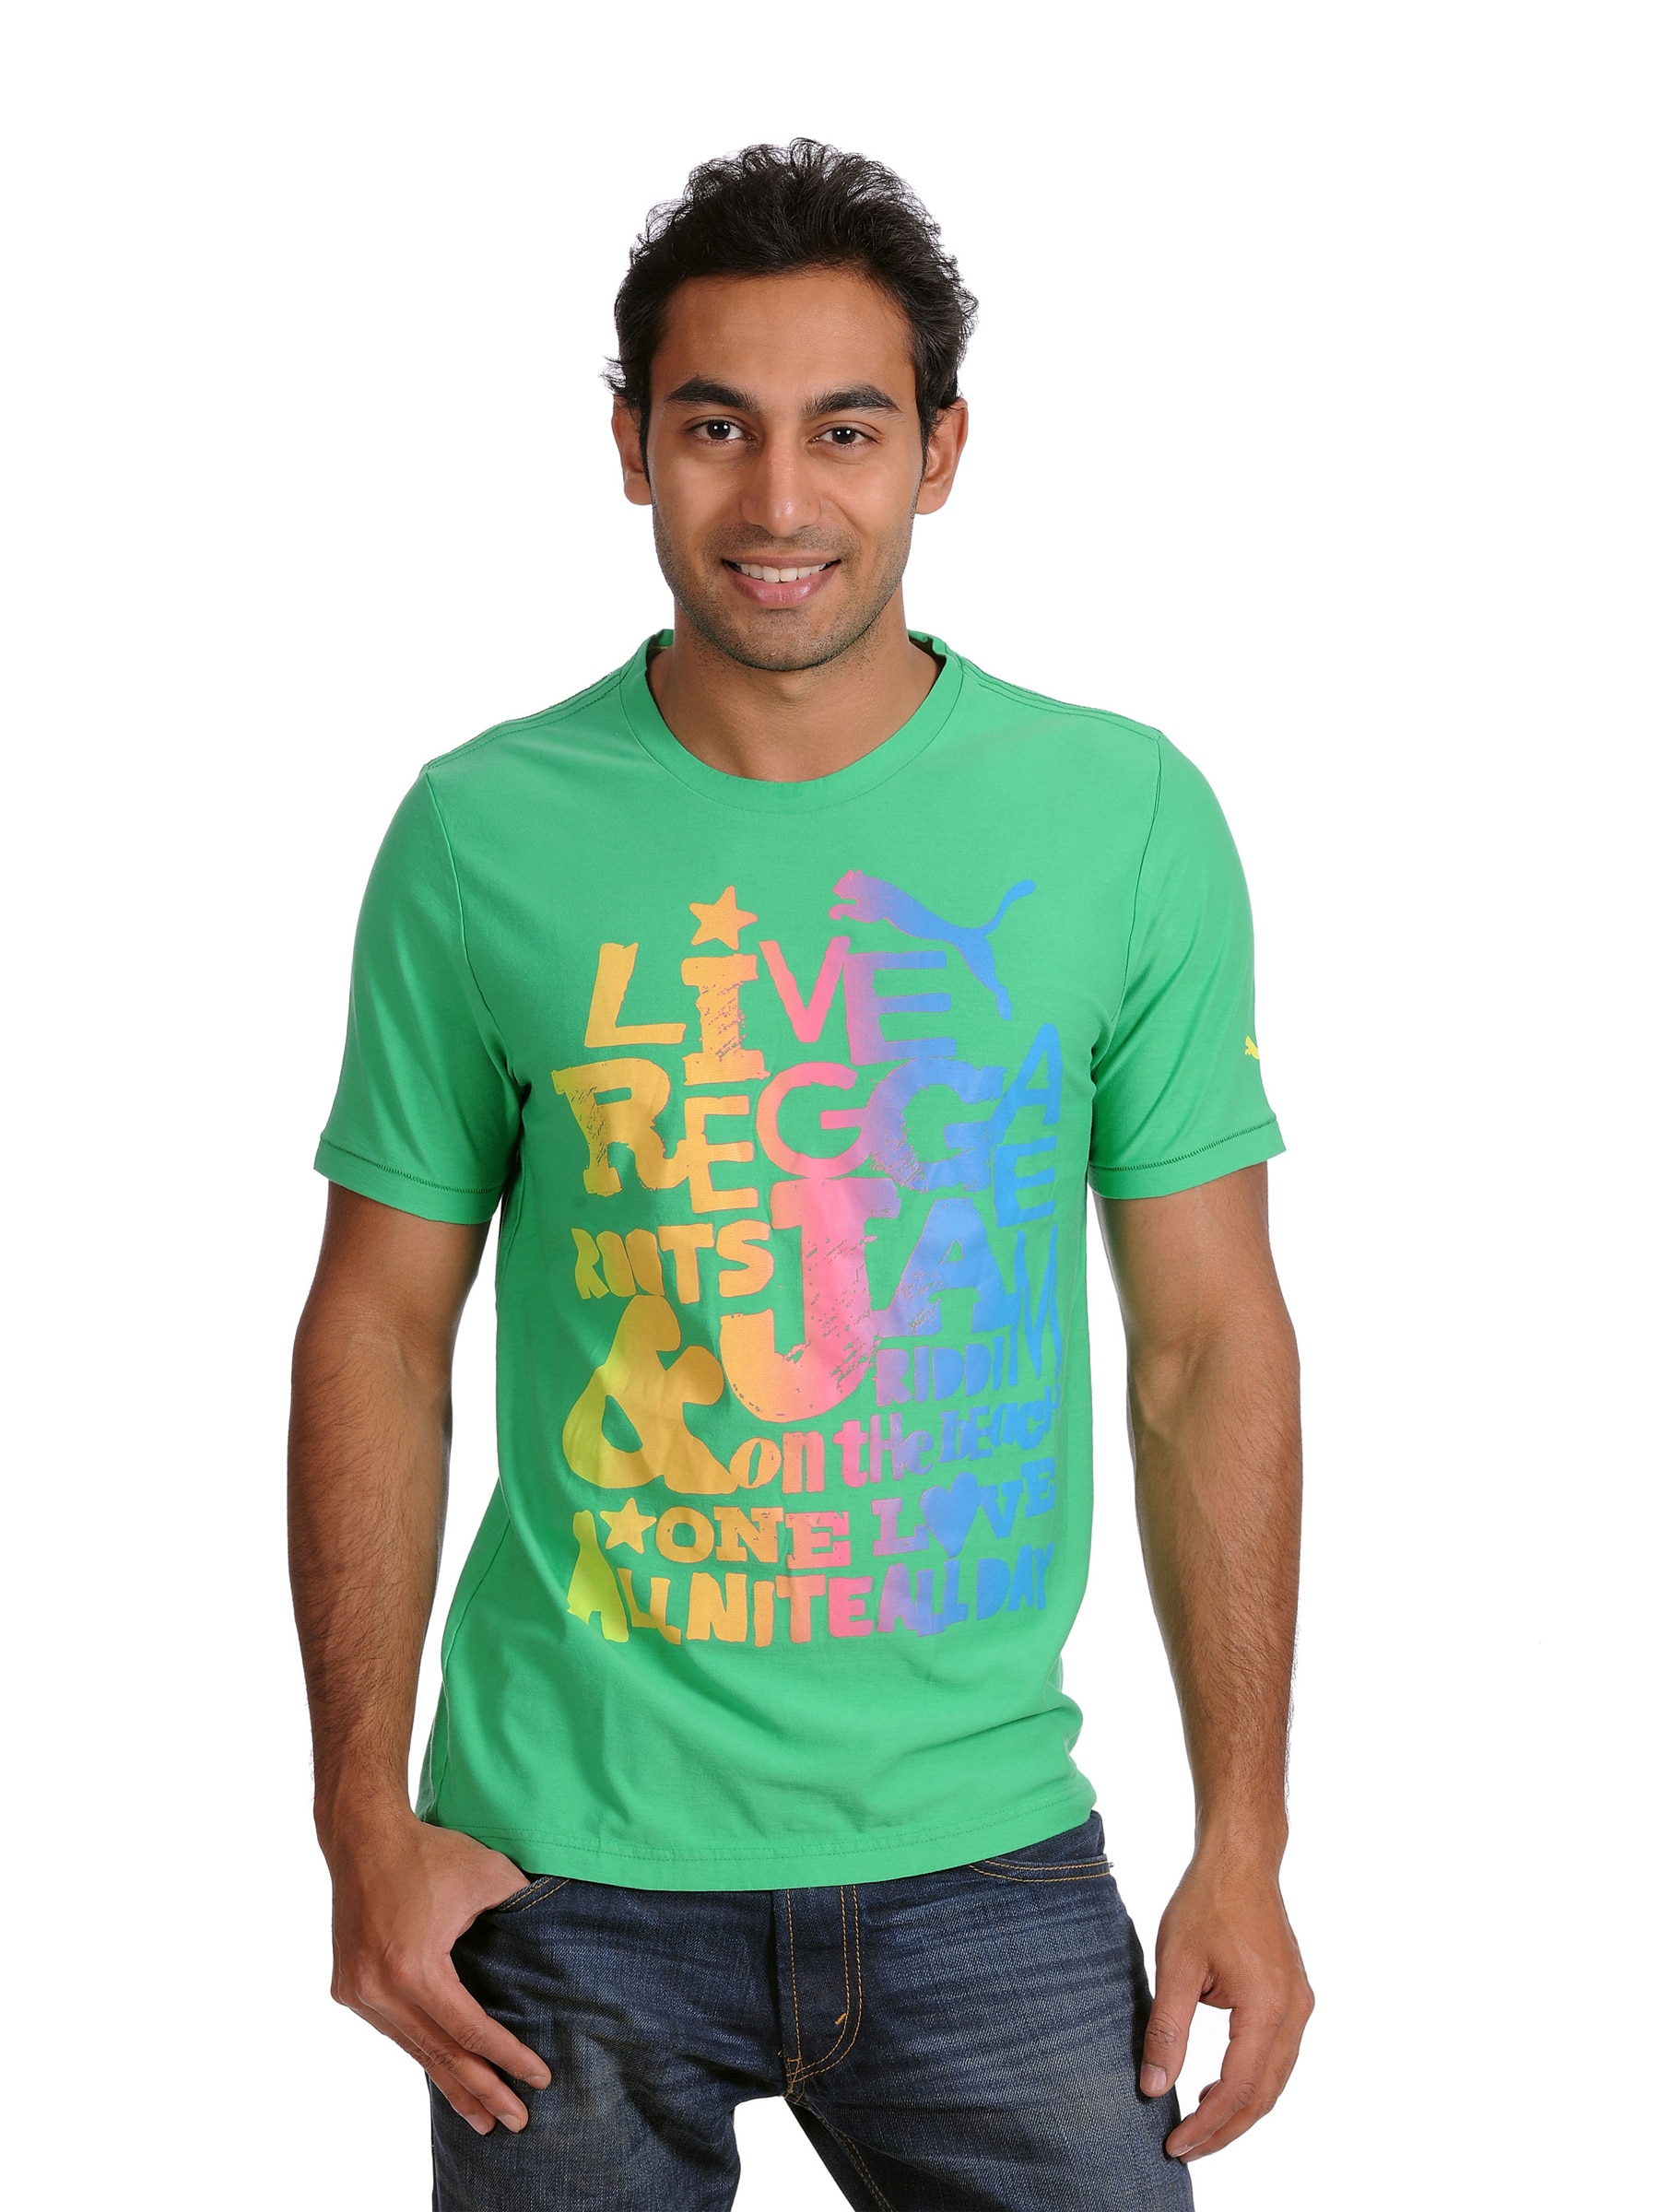 Puma Mens Reggae All Night Green T-shirt